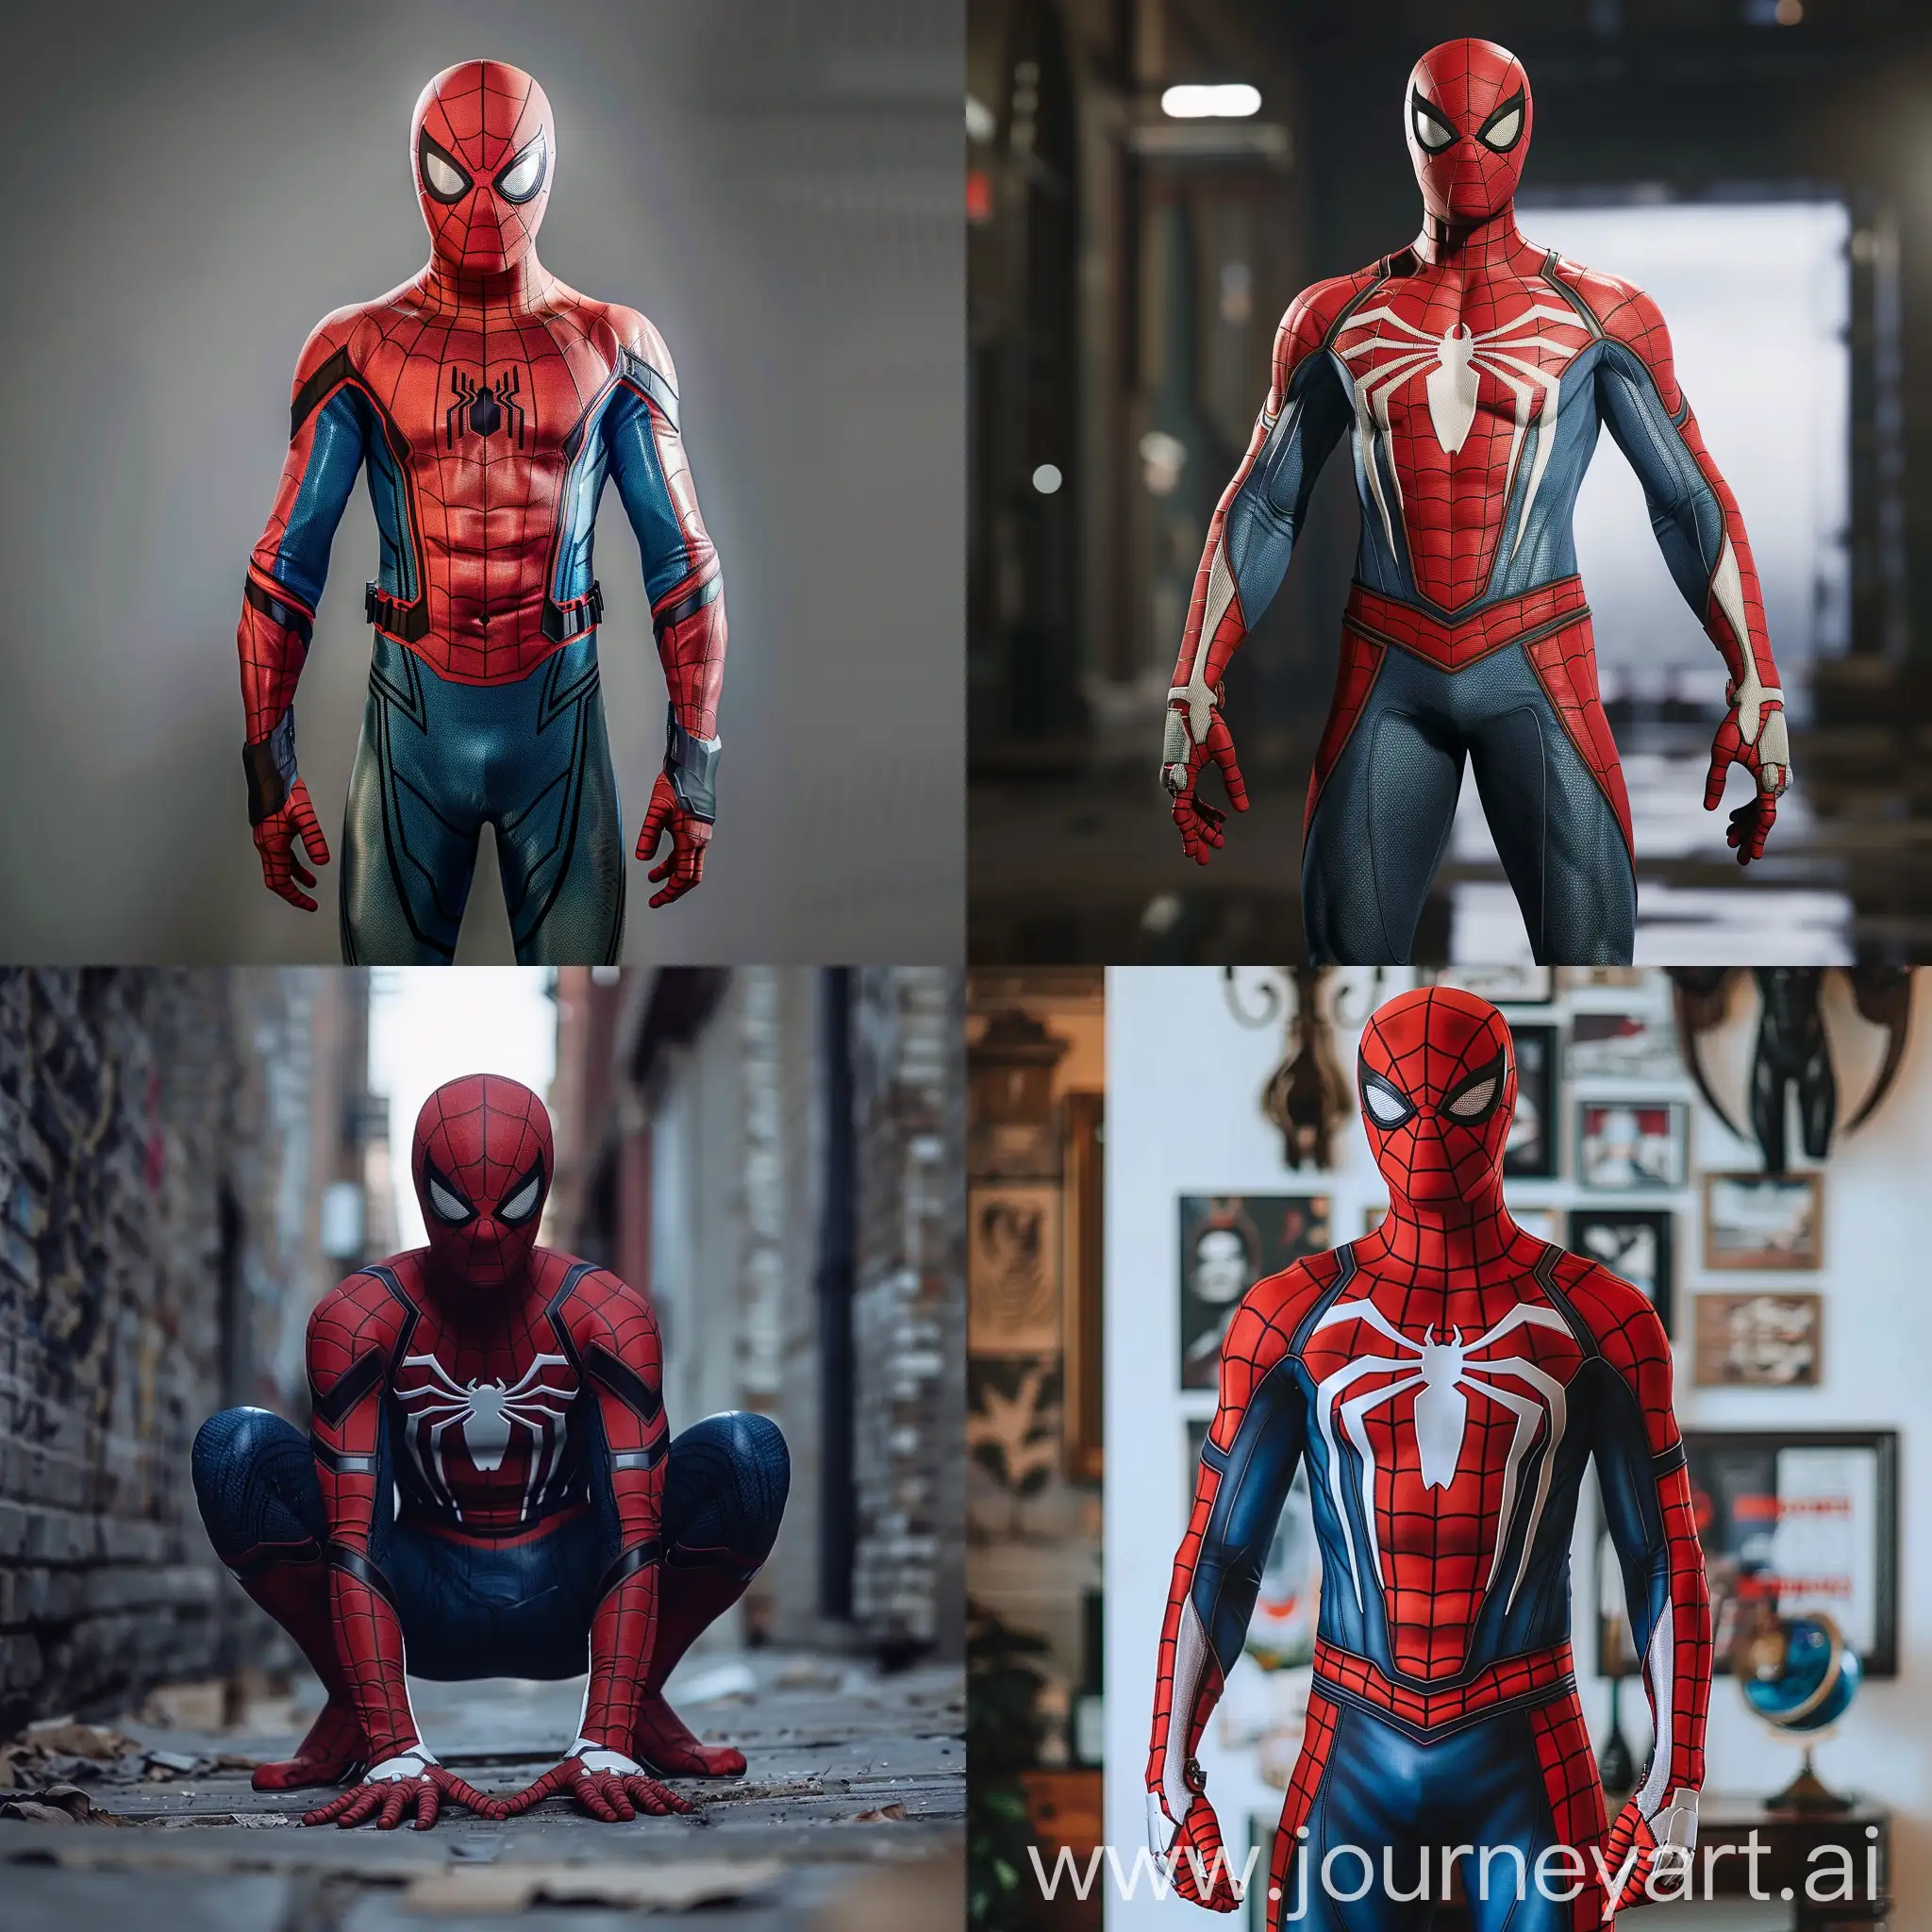 Spiderman-in-Dynamic-Full-Body-Pose-Artistic-Rendering